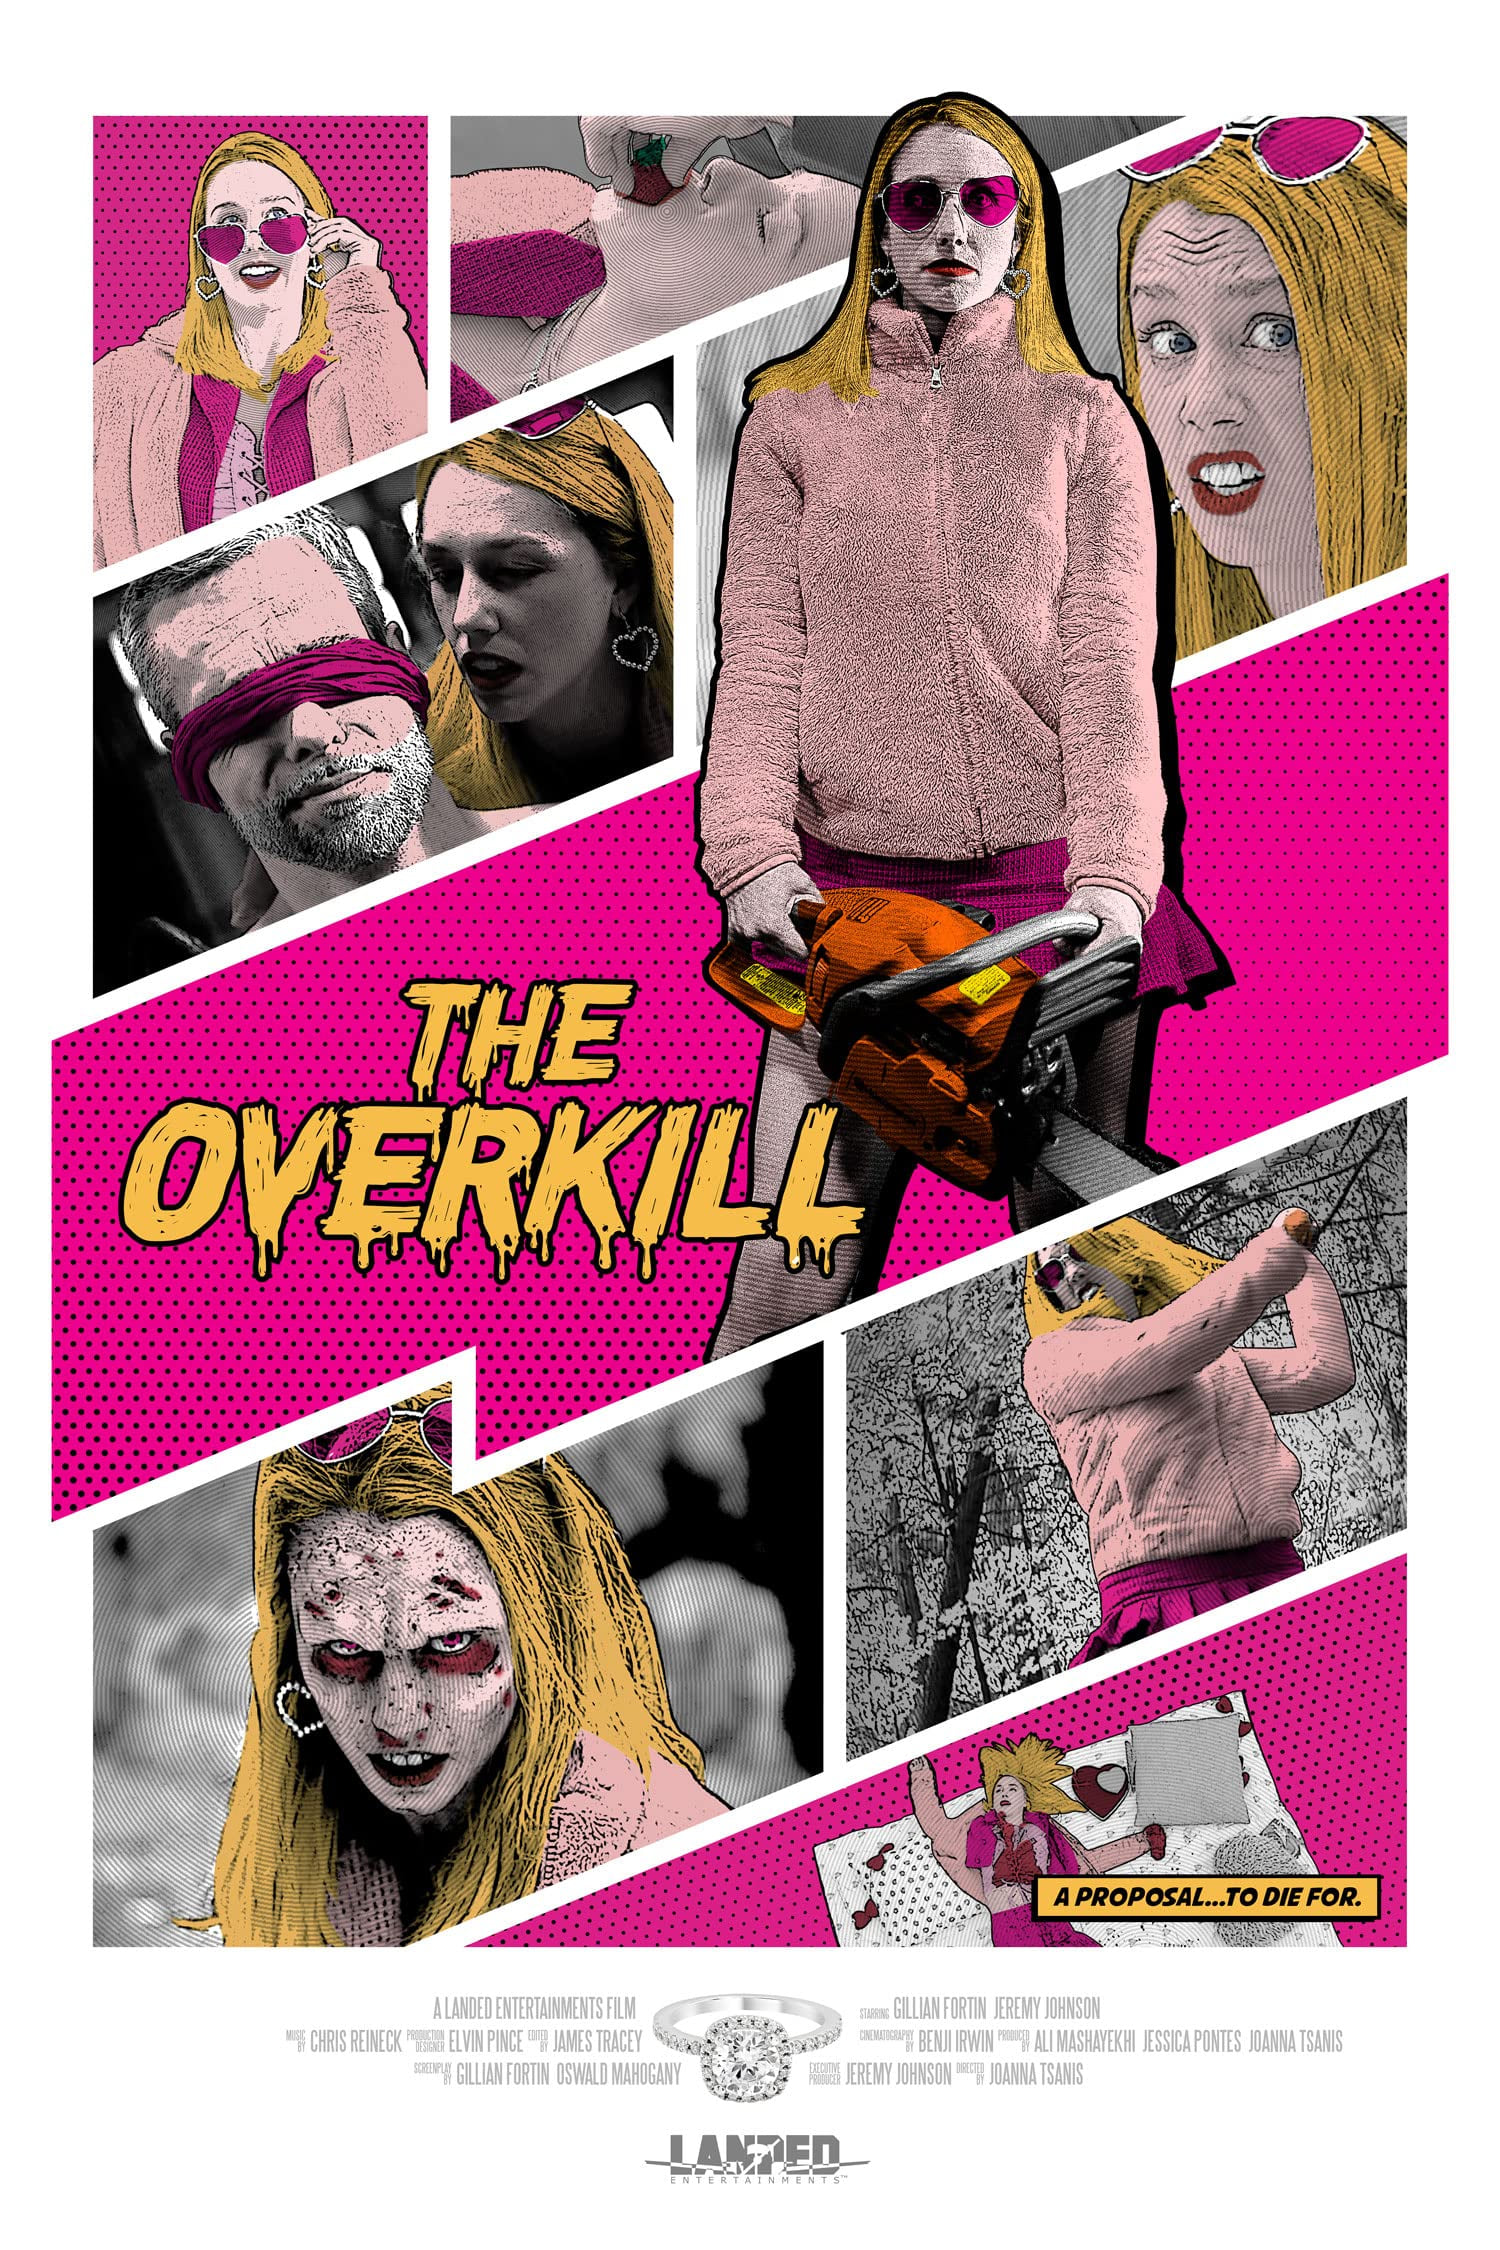 The Overkill